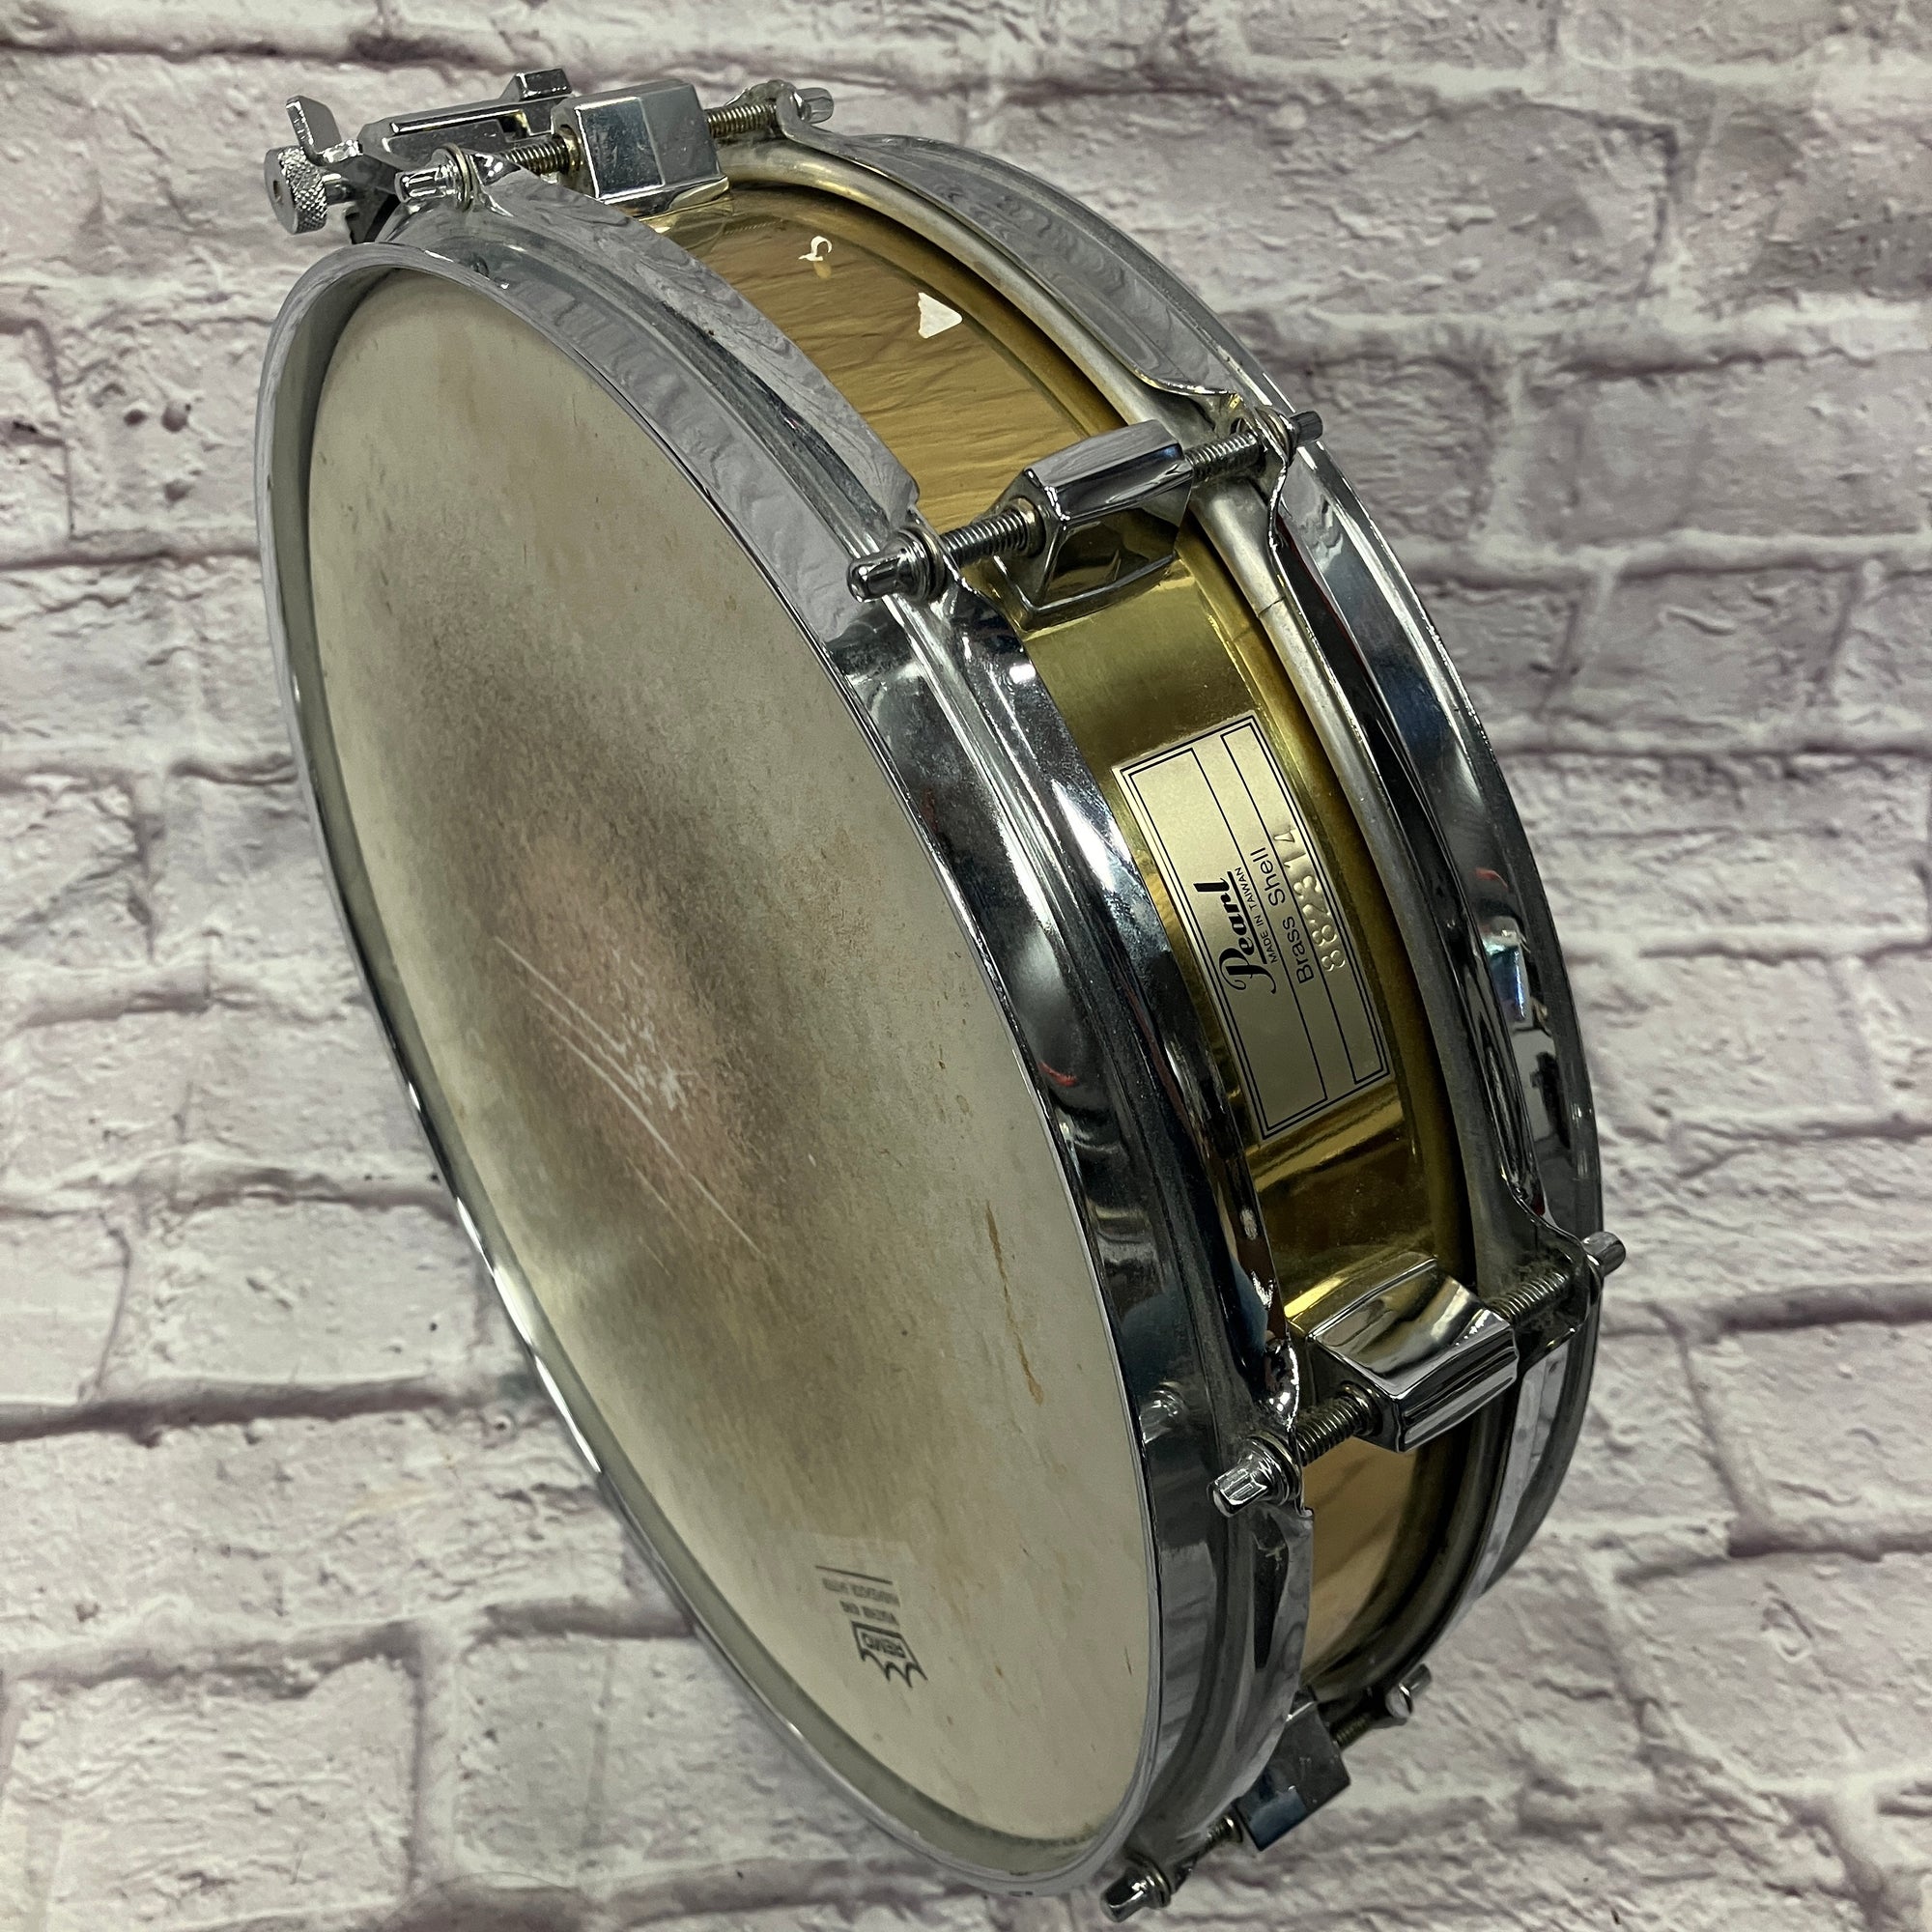 Pearl Piccolo 13 x 3 Brass Shell Snare Drum